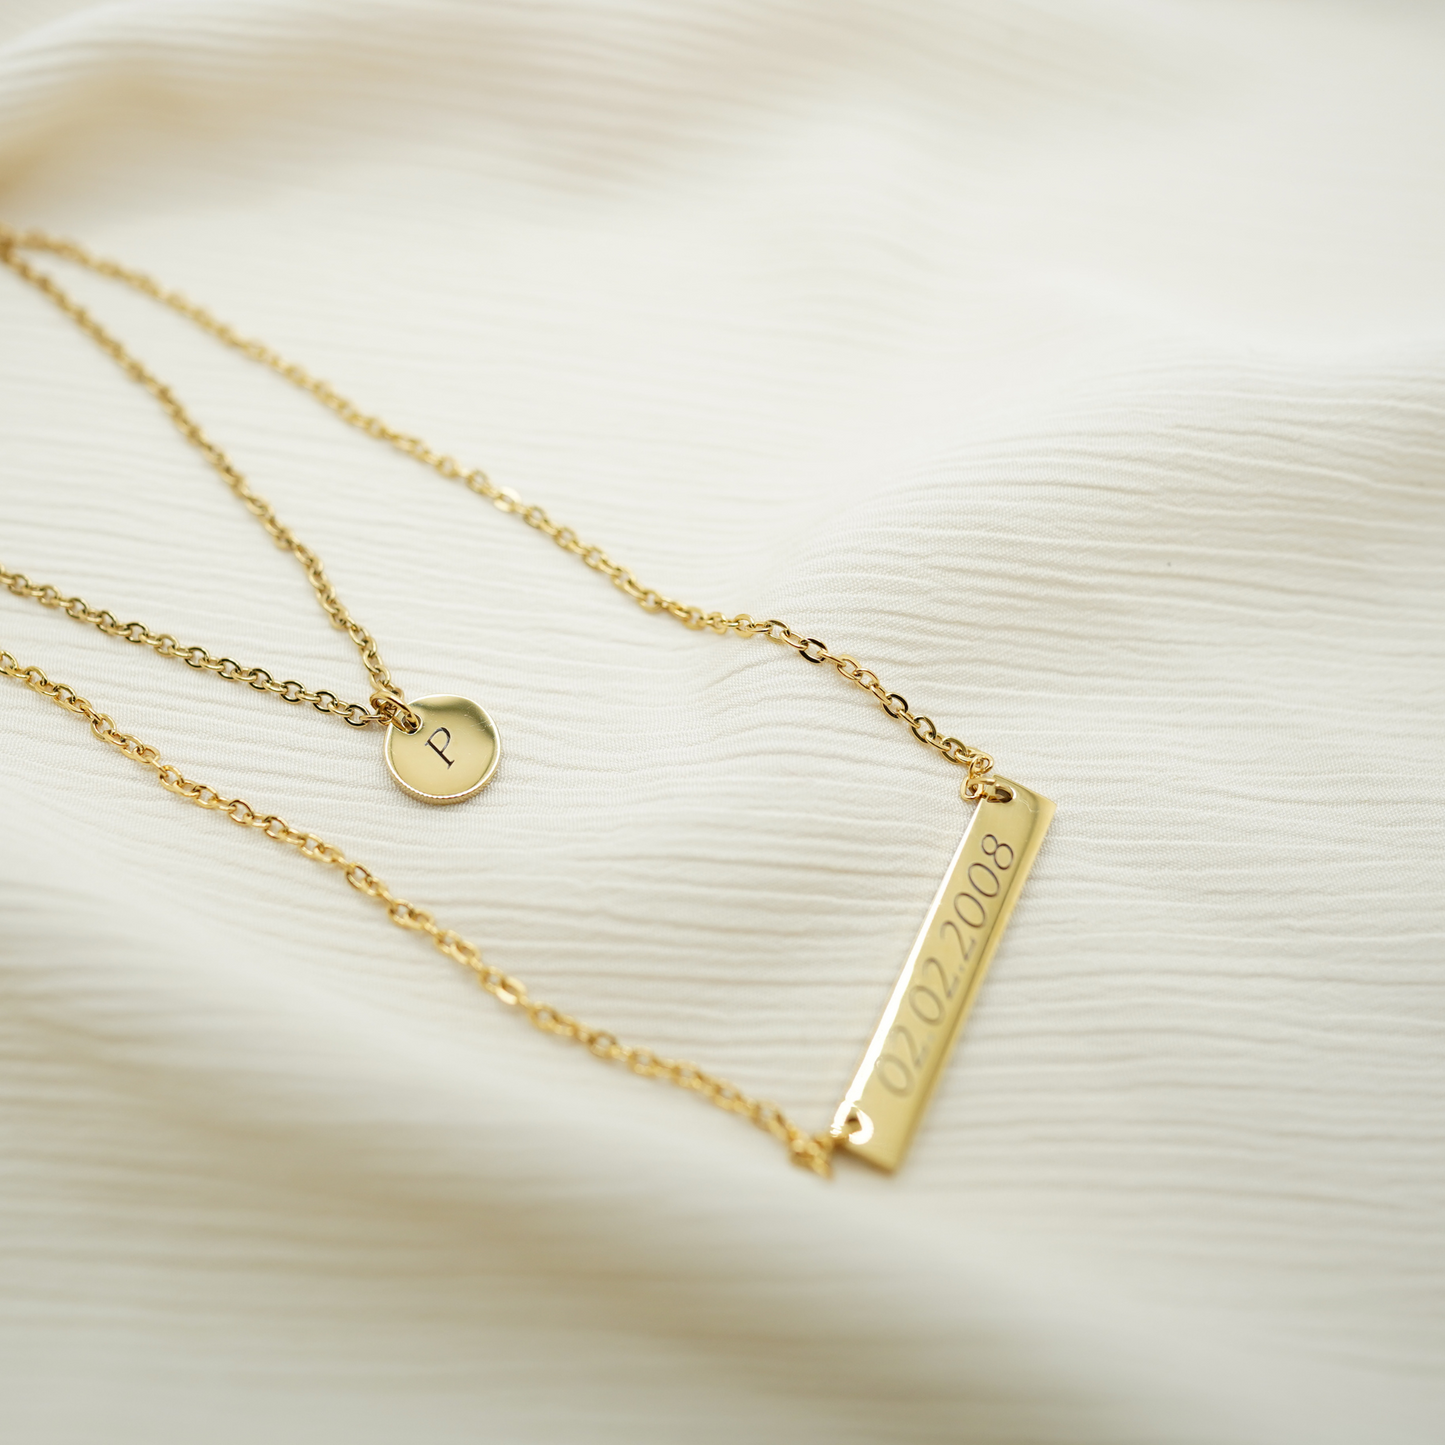 Personalized (35mm x6mm Pendant w/circle charm) 18K Gold Vermeil Pendant Necklace